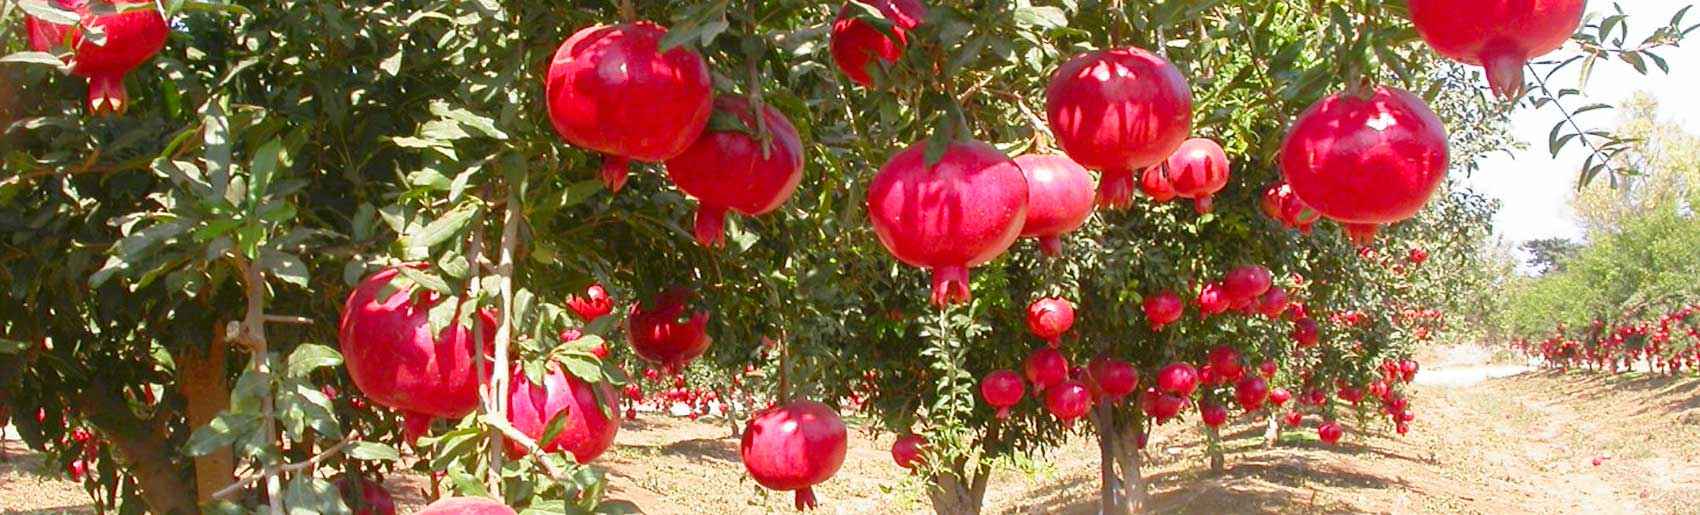 Pomegranate Farms